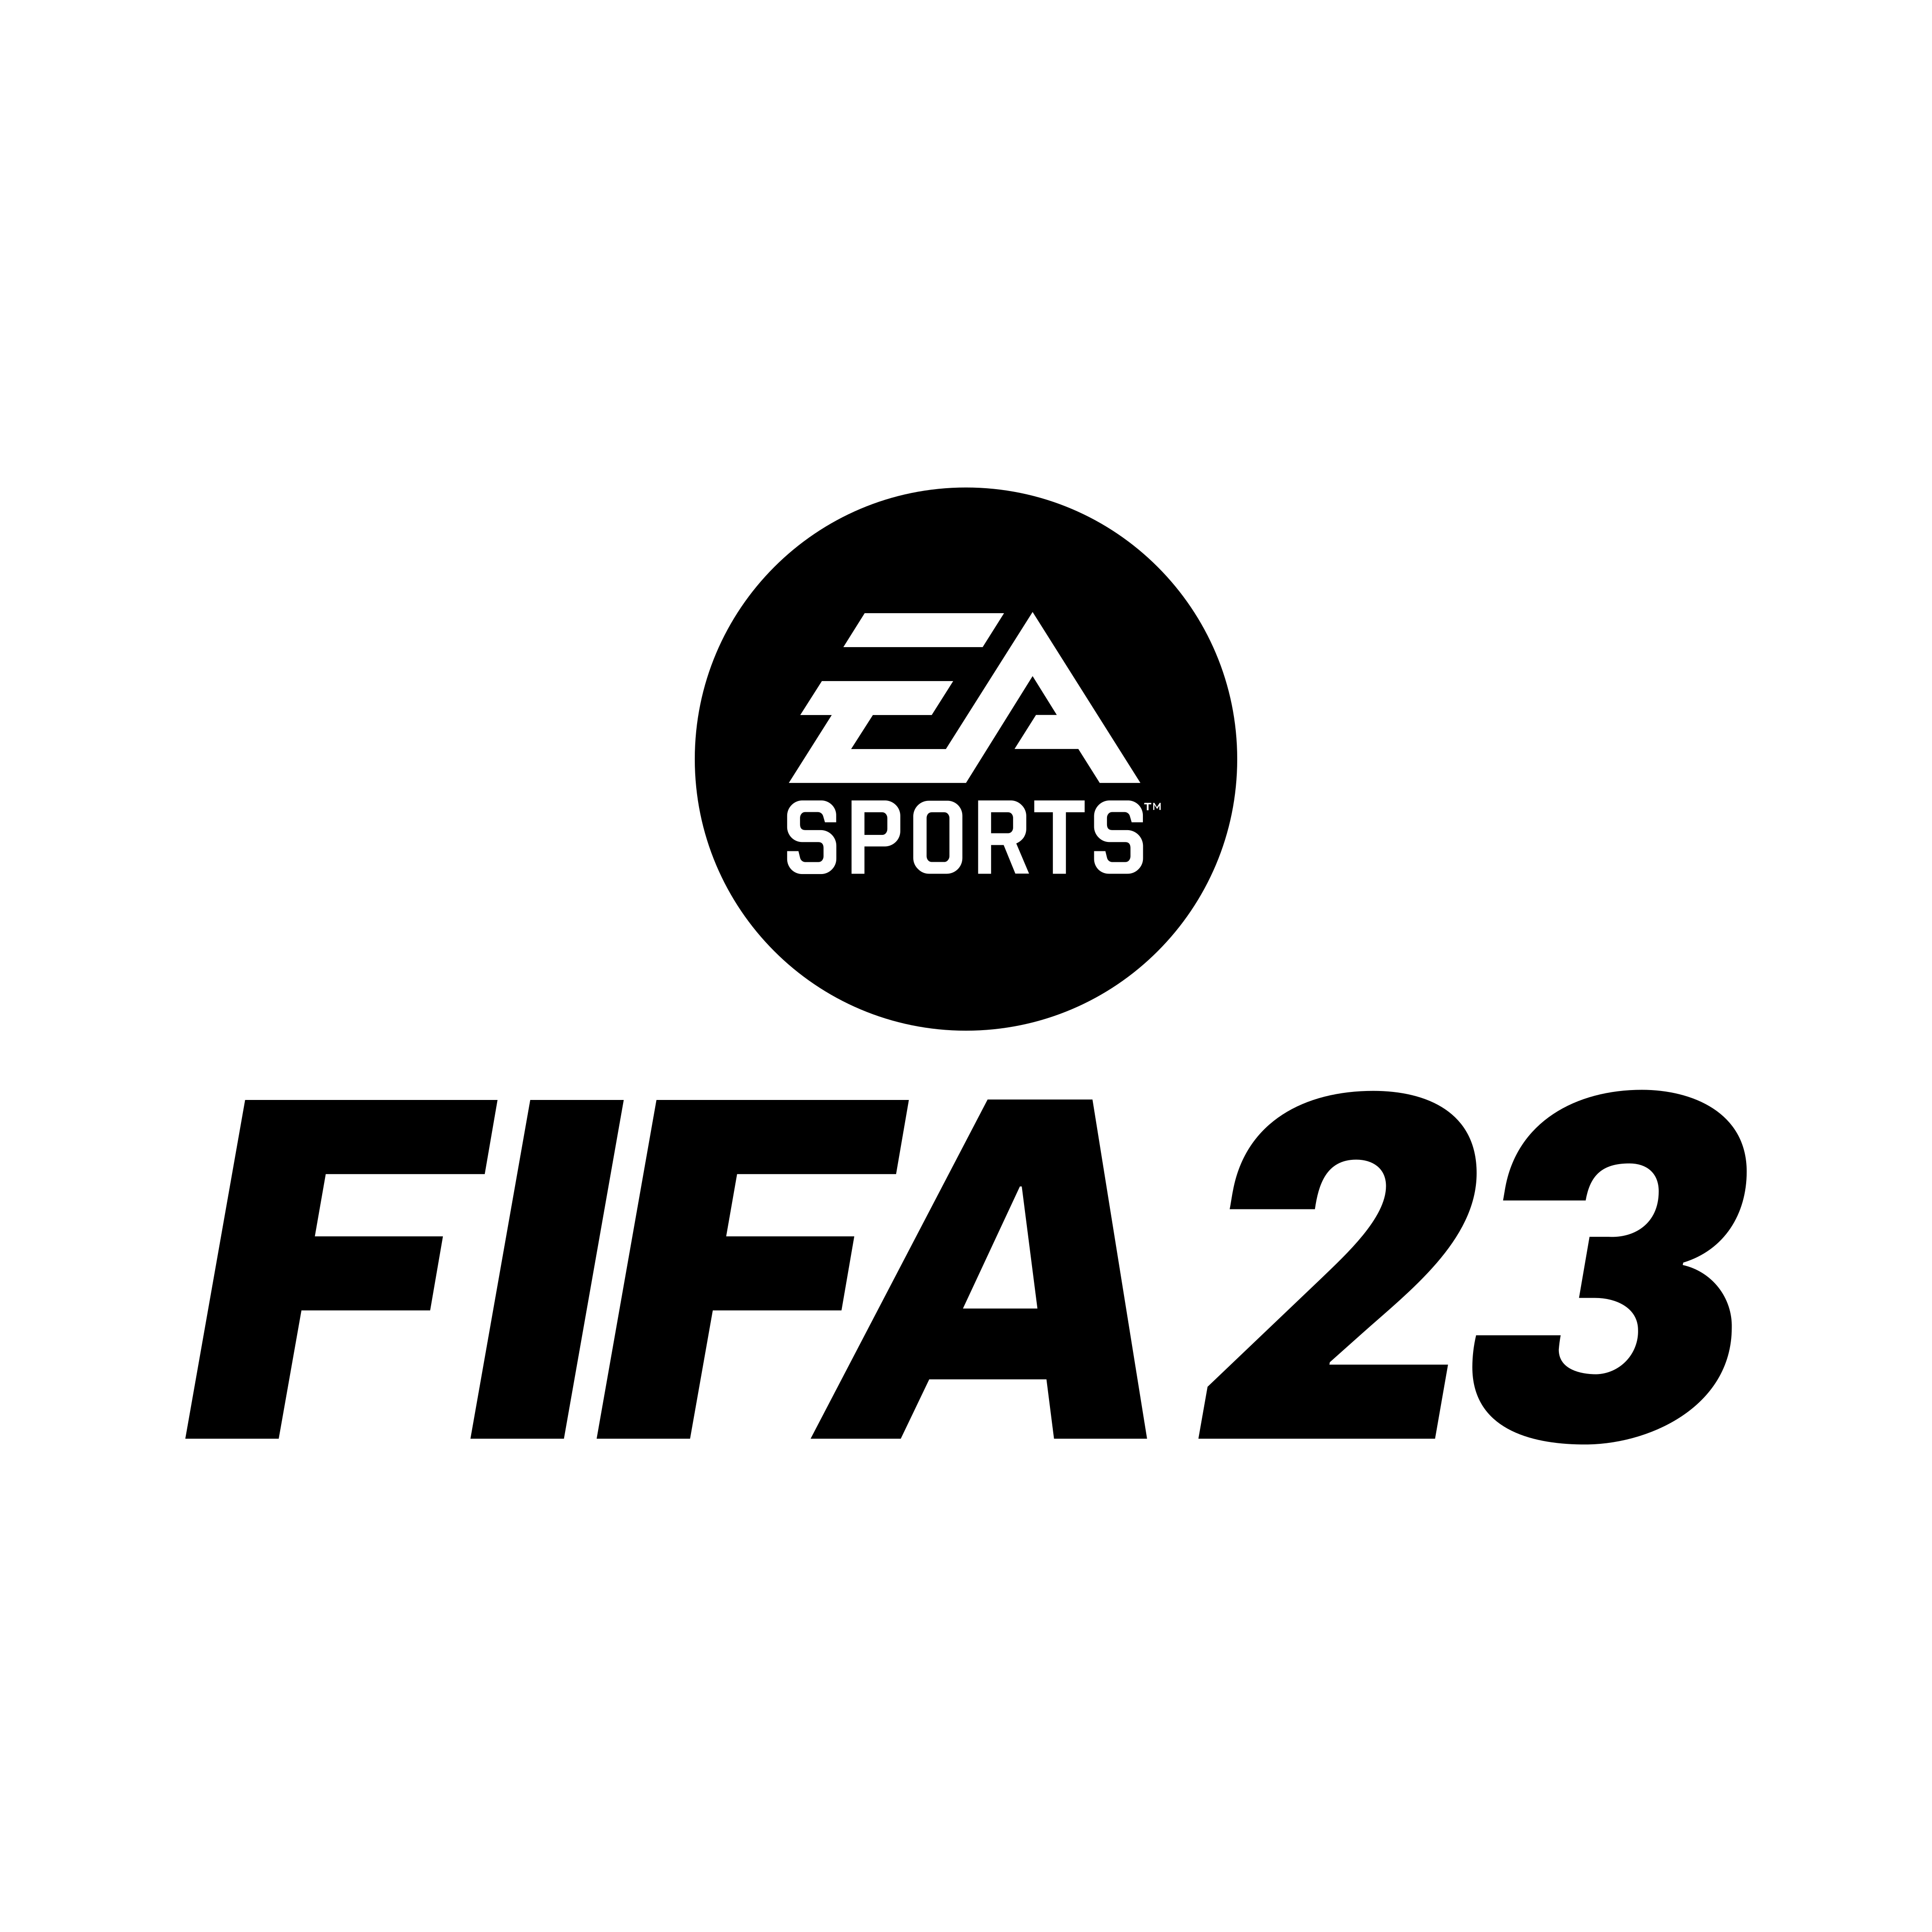 fifa23 logo 0 - FIFA 23 Logo